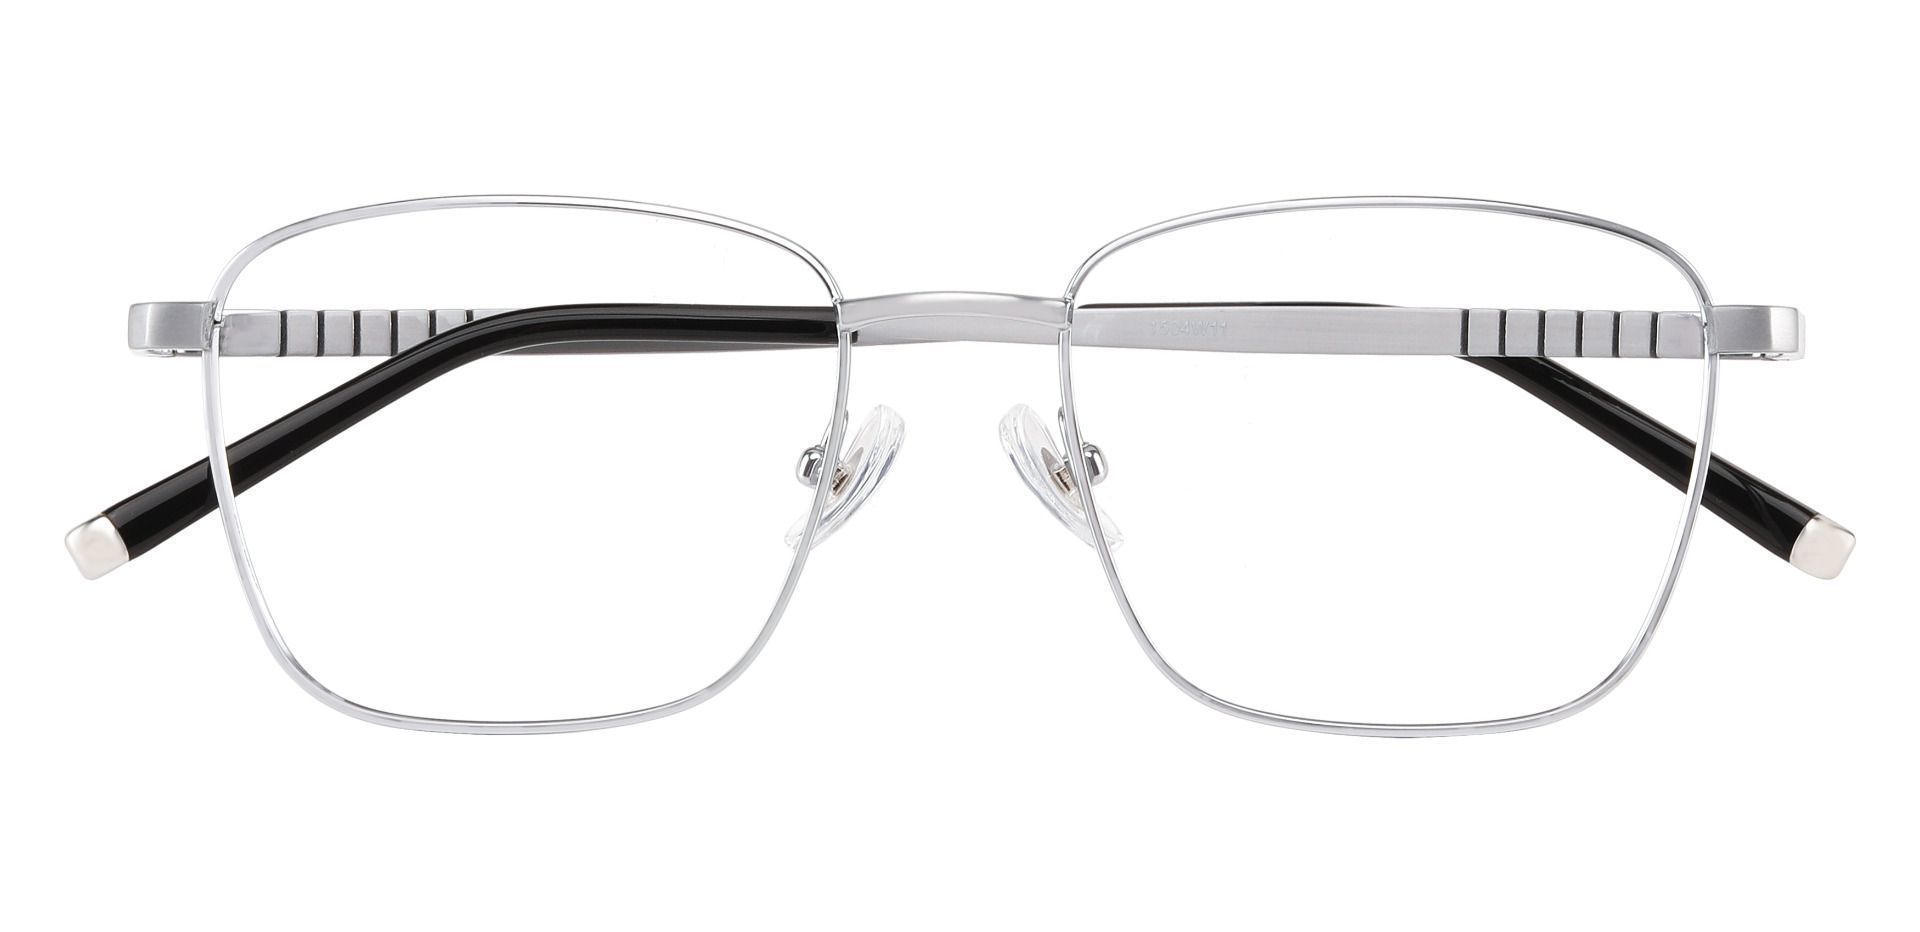 May Square Eyeglasses Frame - Silver